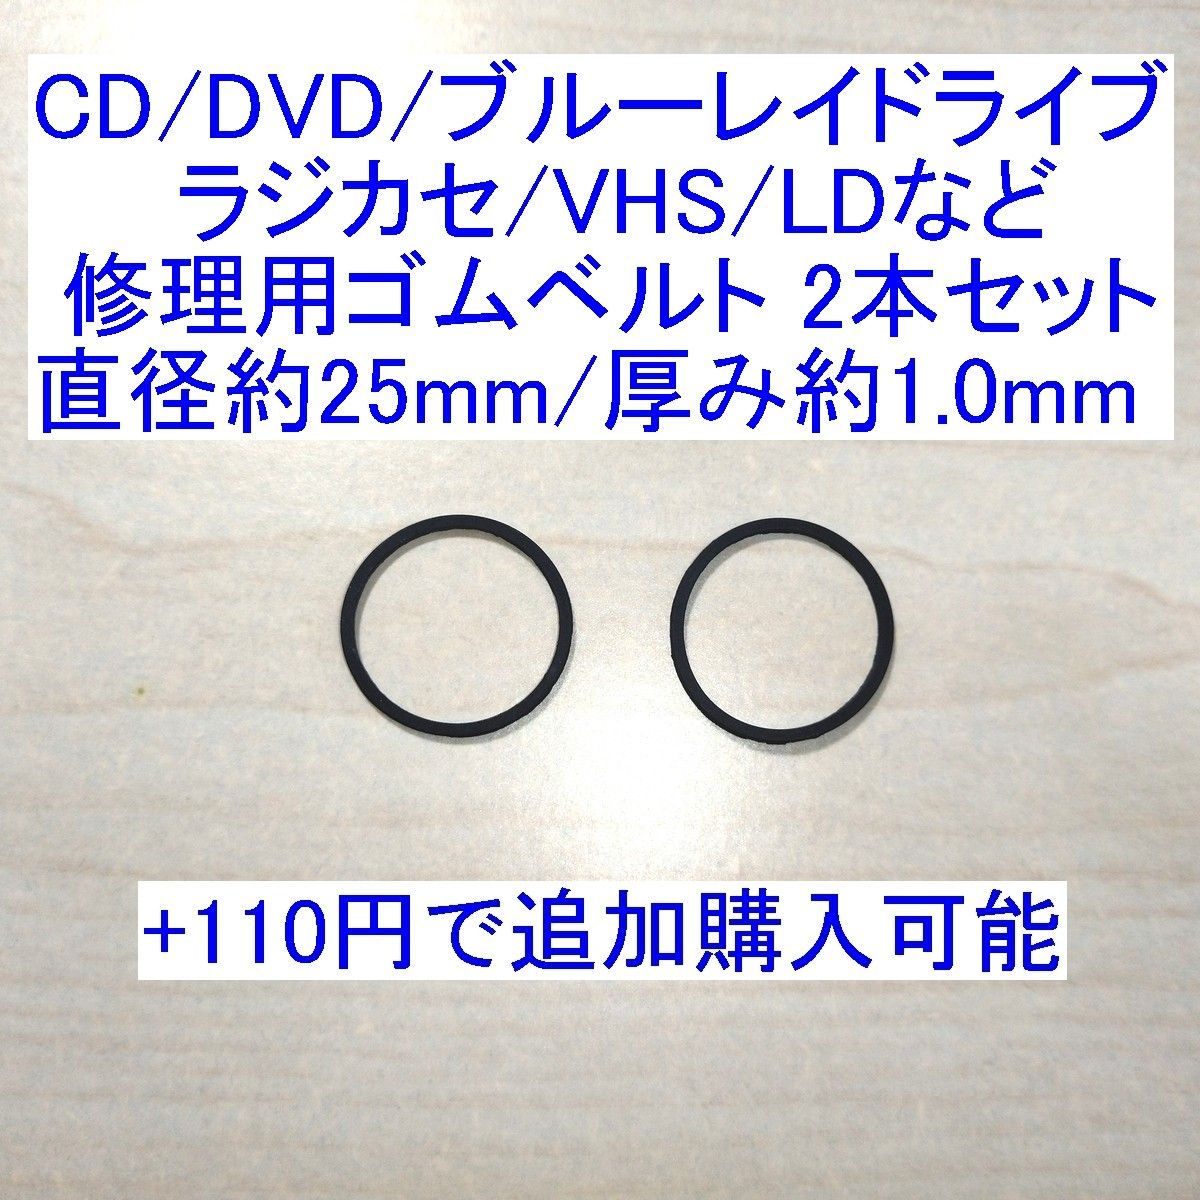 CD/DVD/ブルーレイドライブ/ラジカセ/VHS/MD/LD用 修理/補修用ゴムベルト 2本セット 直径25mm